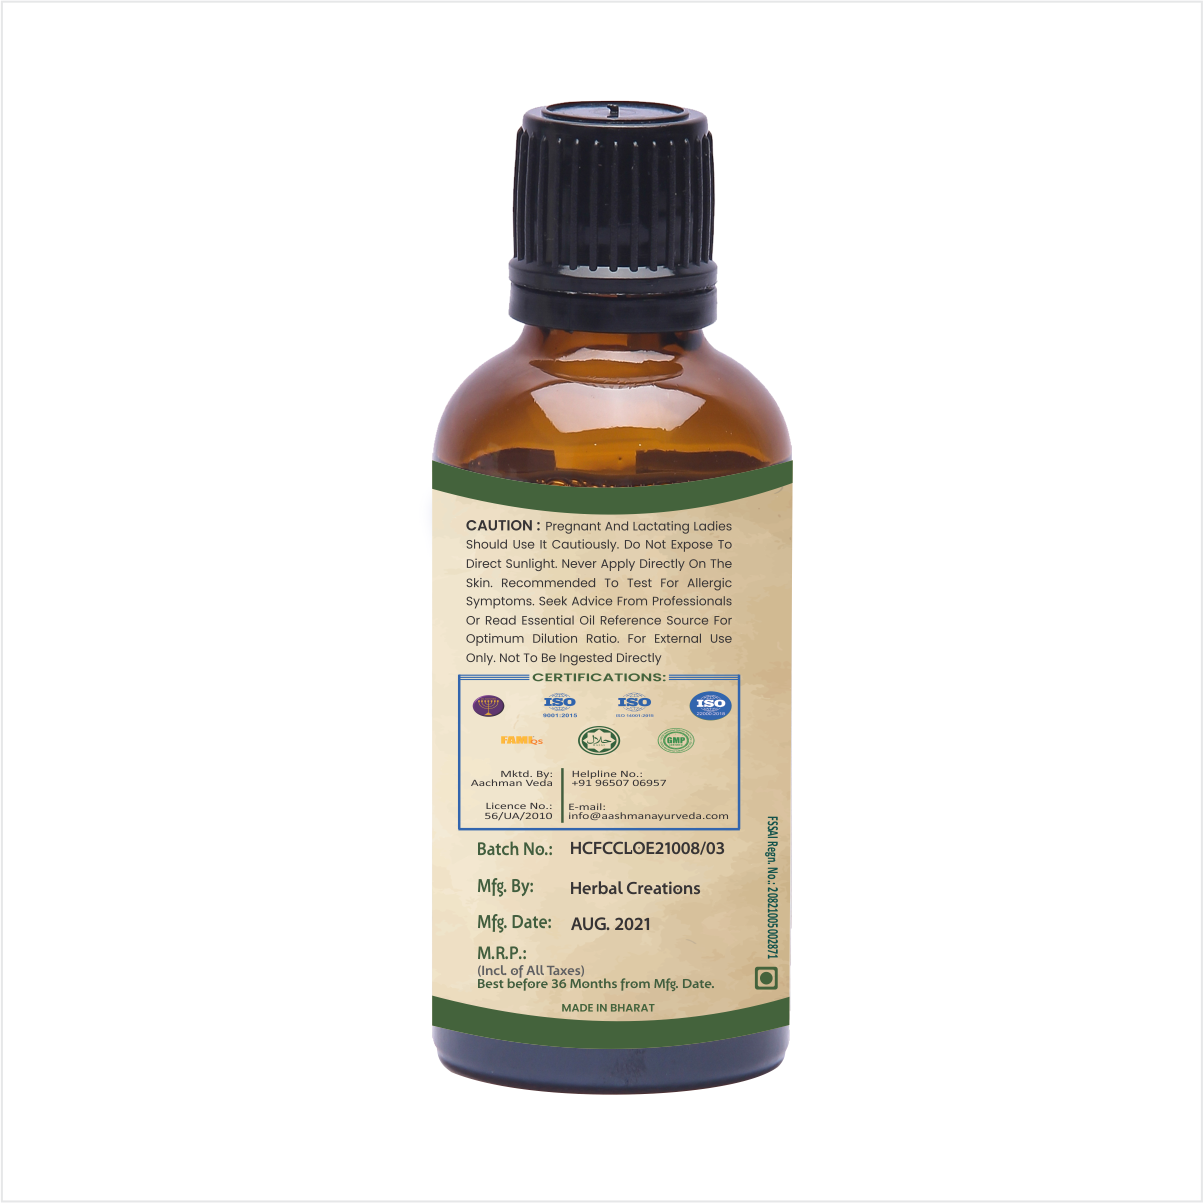 Buy Aashman Ayurveda Essential Oil Lemon Grass 50 ML at Best Price Online